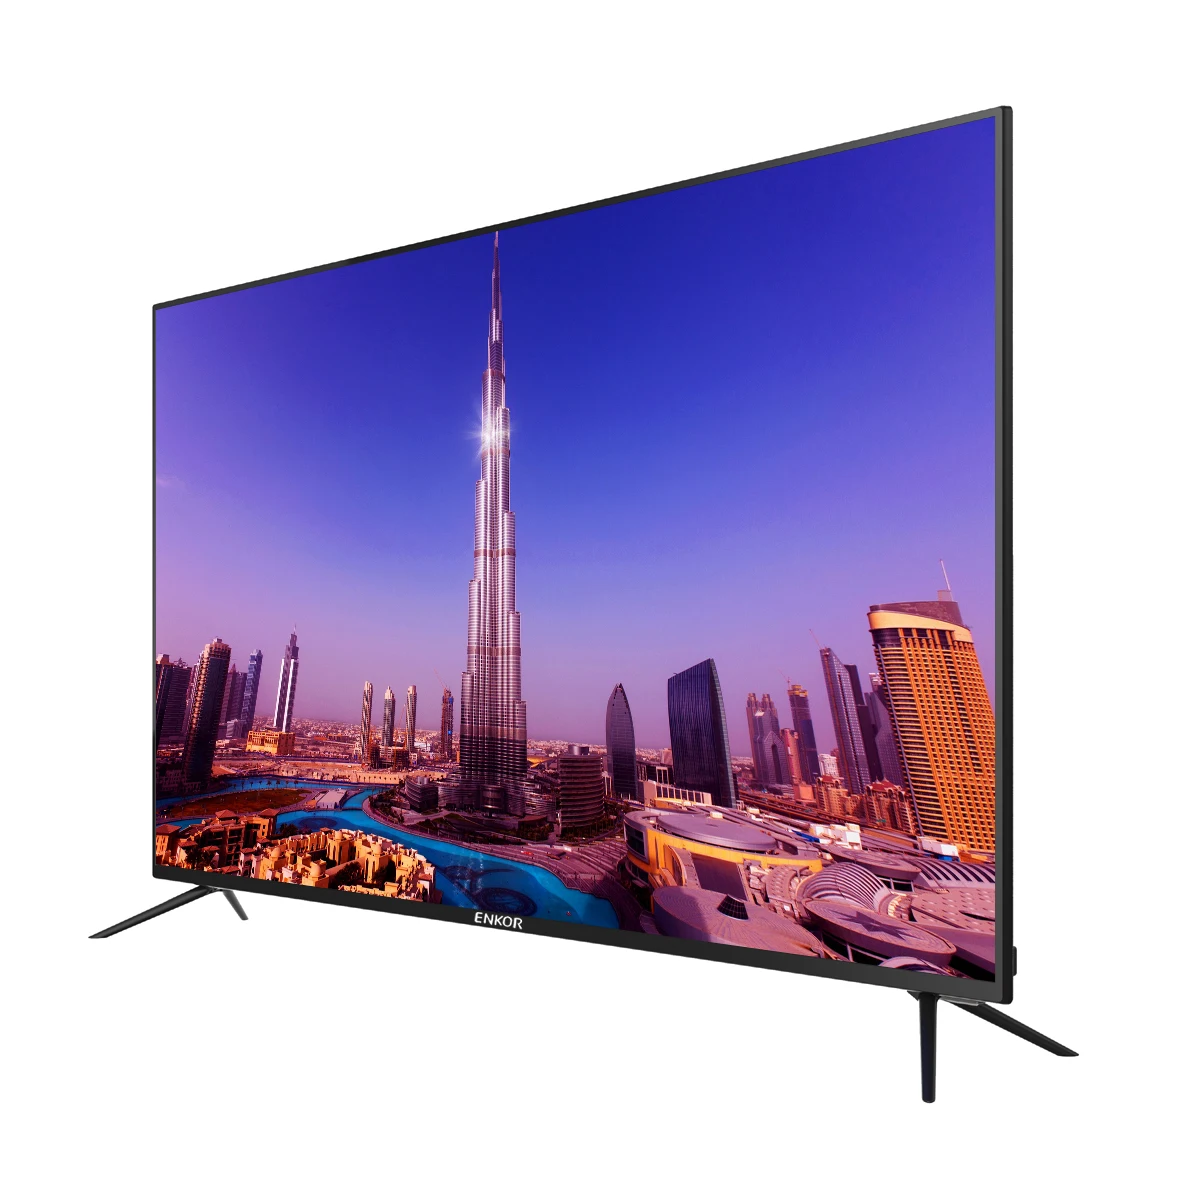 
Led Телевизор маленькая рамка 32 дюймов электронно-телевизор с плоским экраном 4K смарт 3D ЖК Dled ТВ 